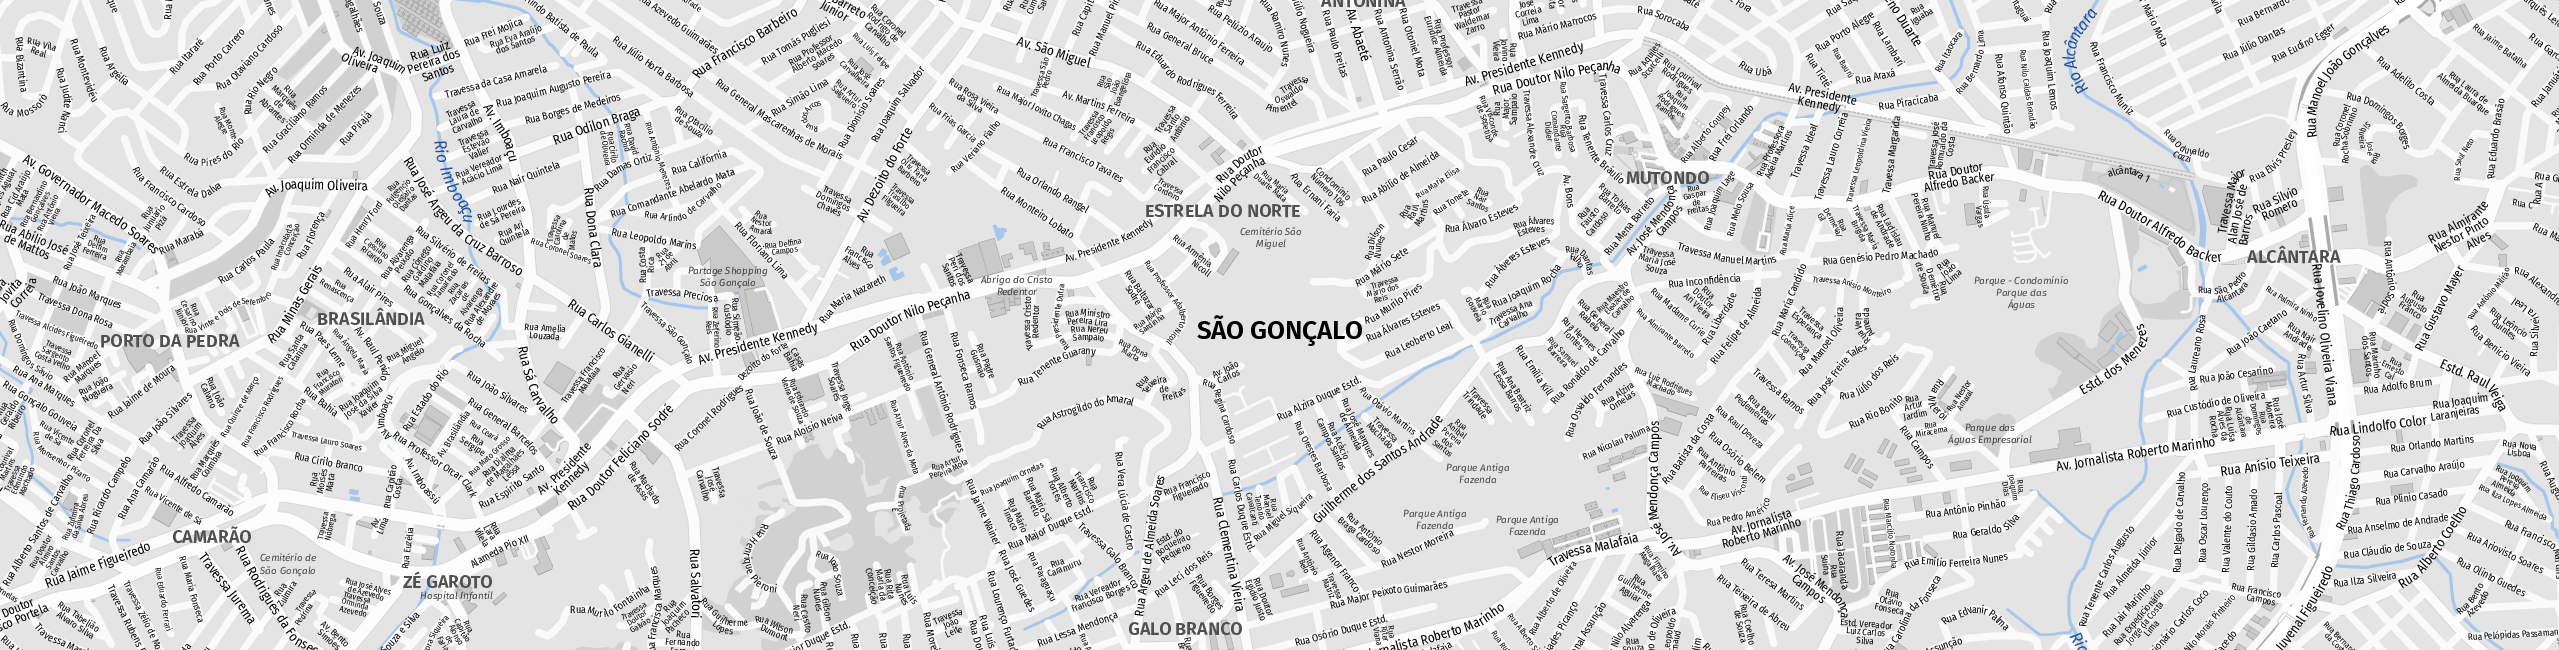 Stadtplan São Gonçalo zum Downloaden.